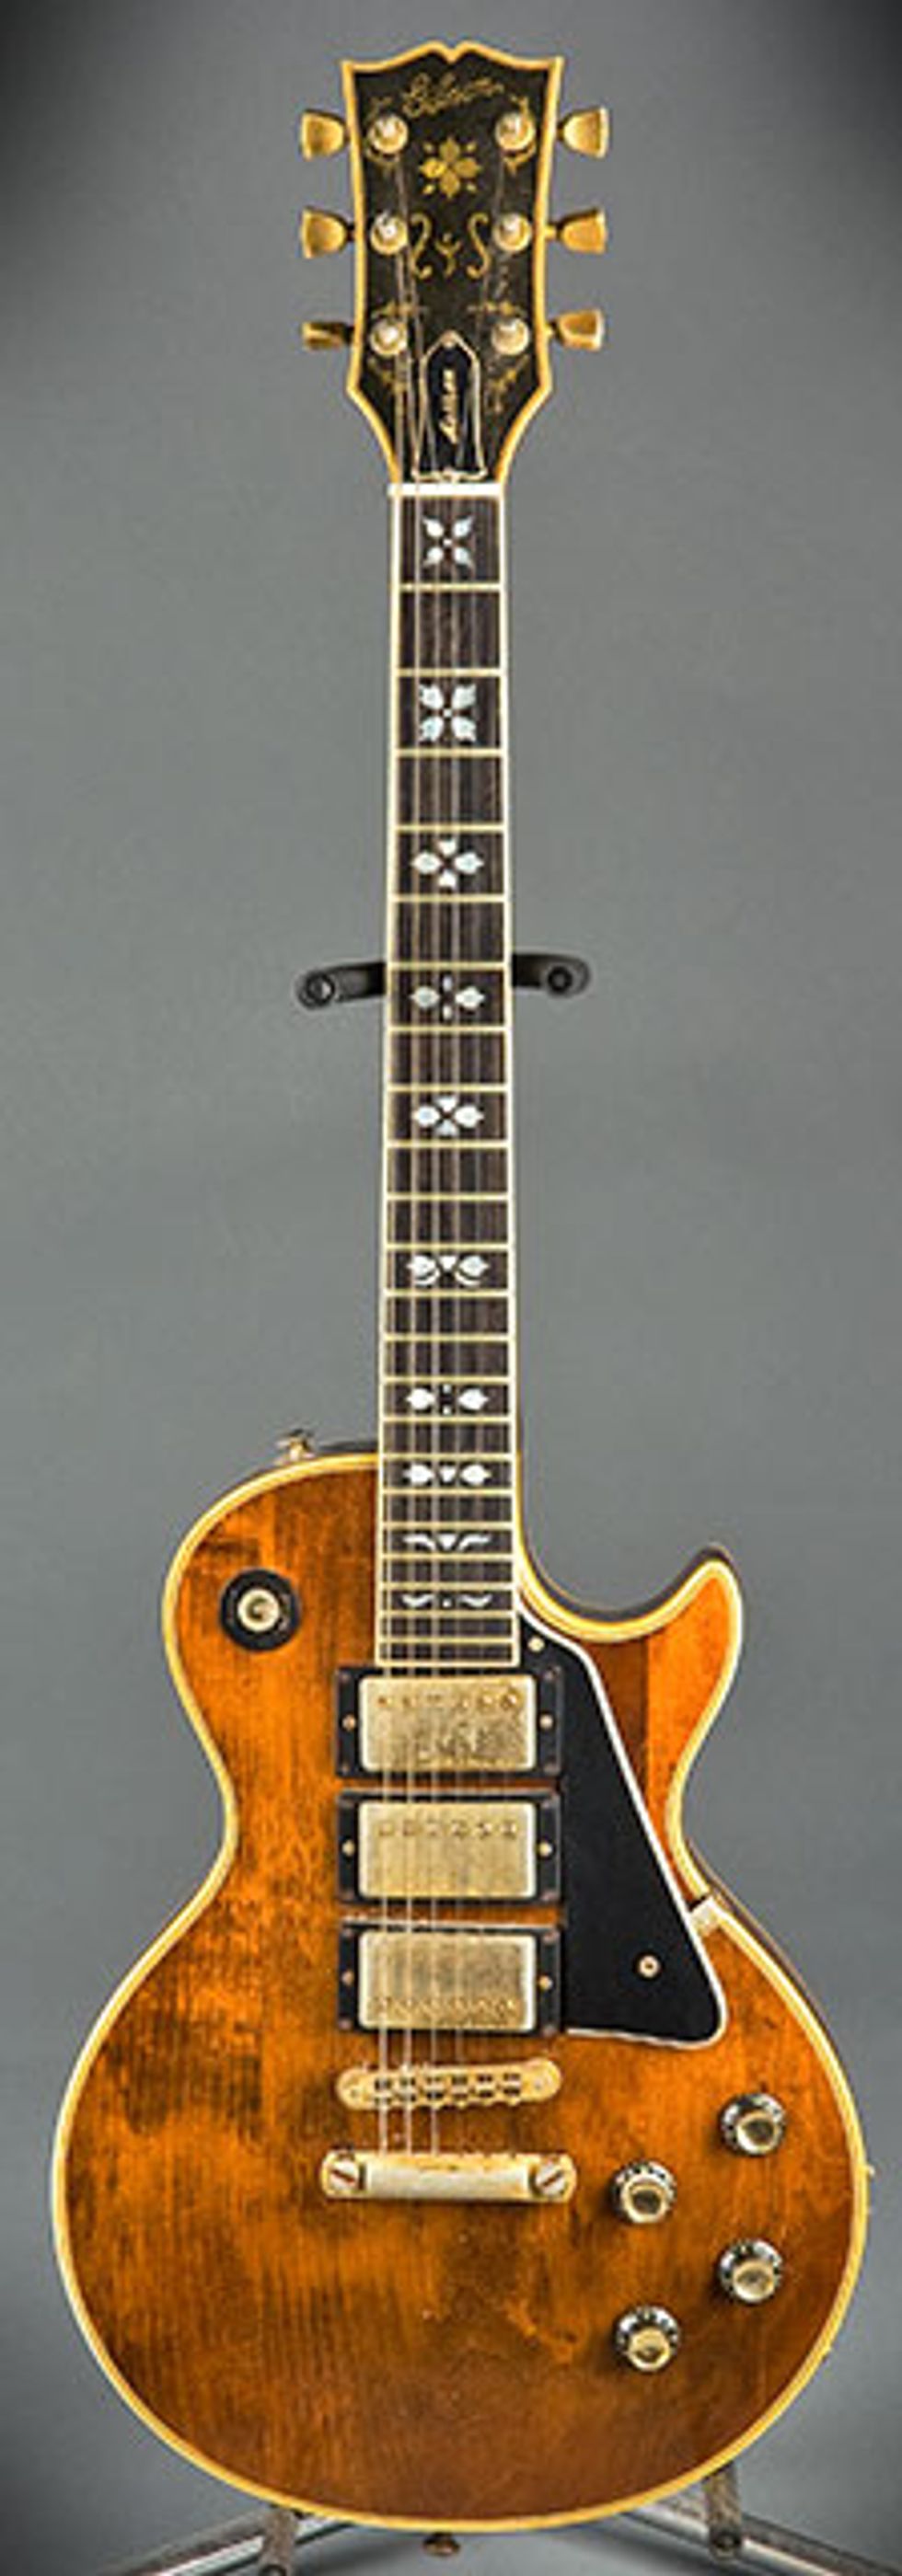 November: The Kinks' Dave Davies' 1977 Gibson Les Paul Artisan